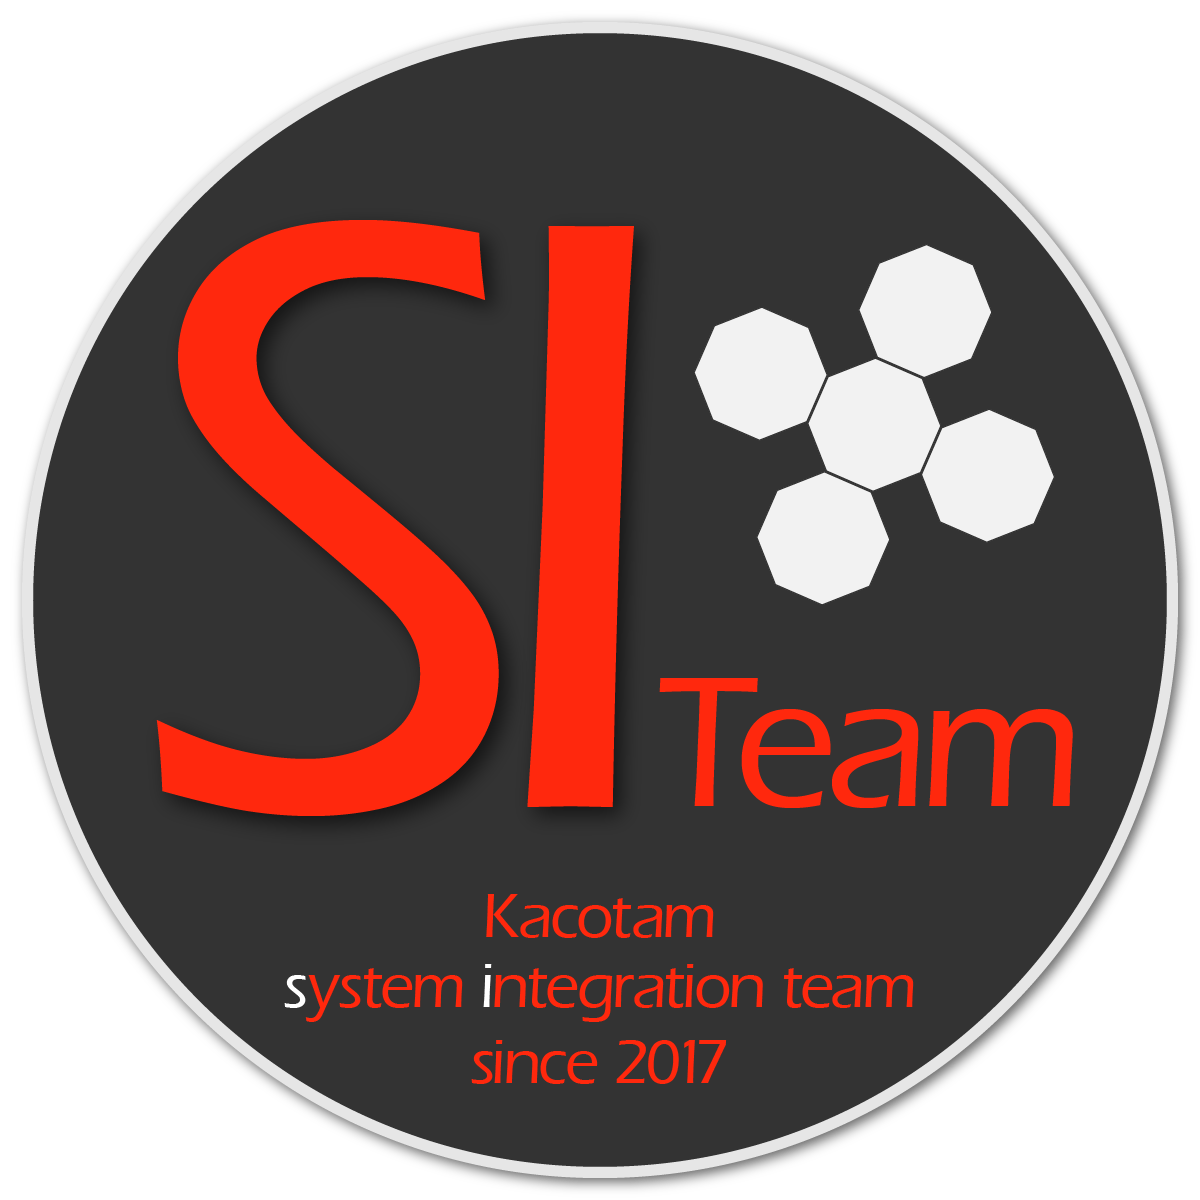 Kacotam System Integration Team logo mark